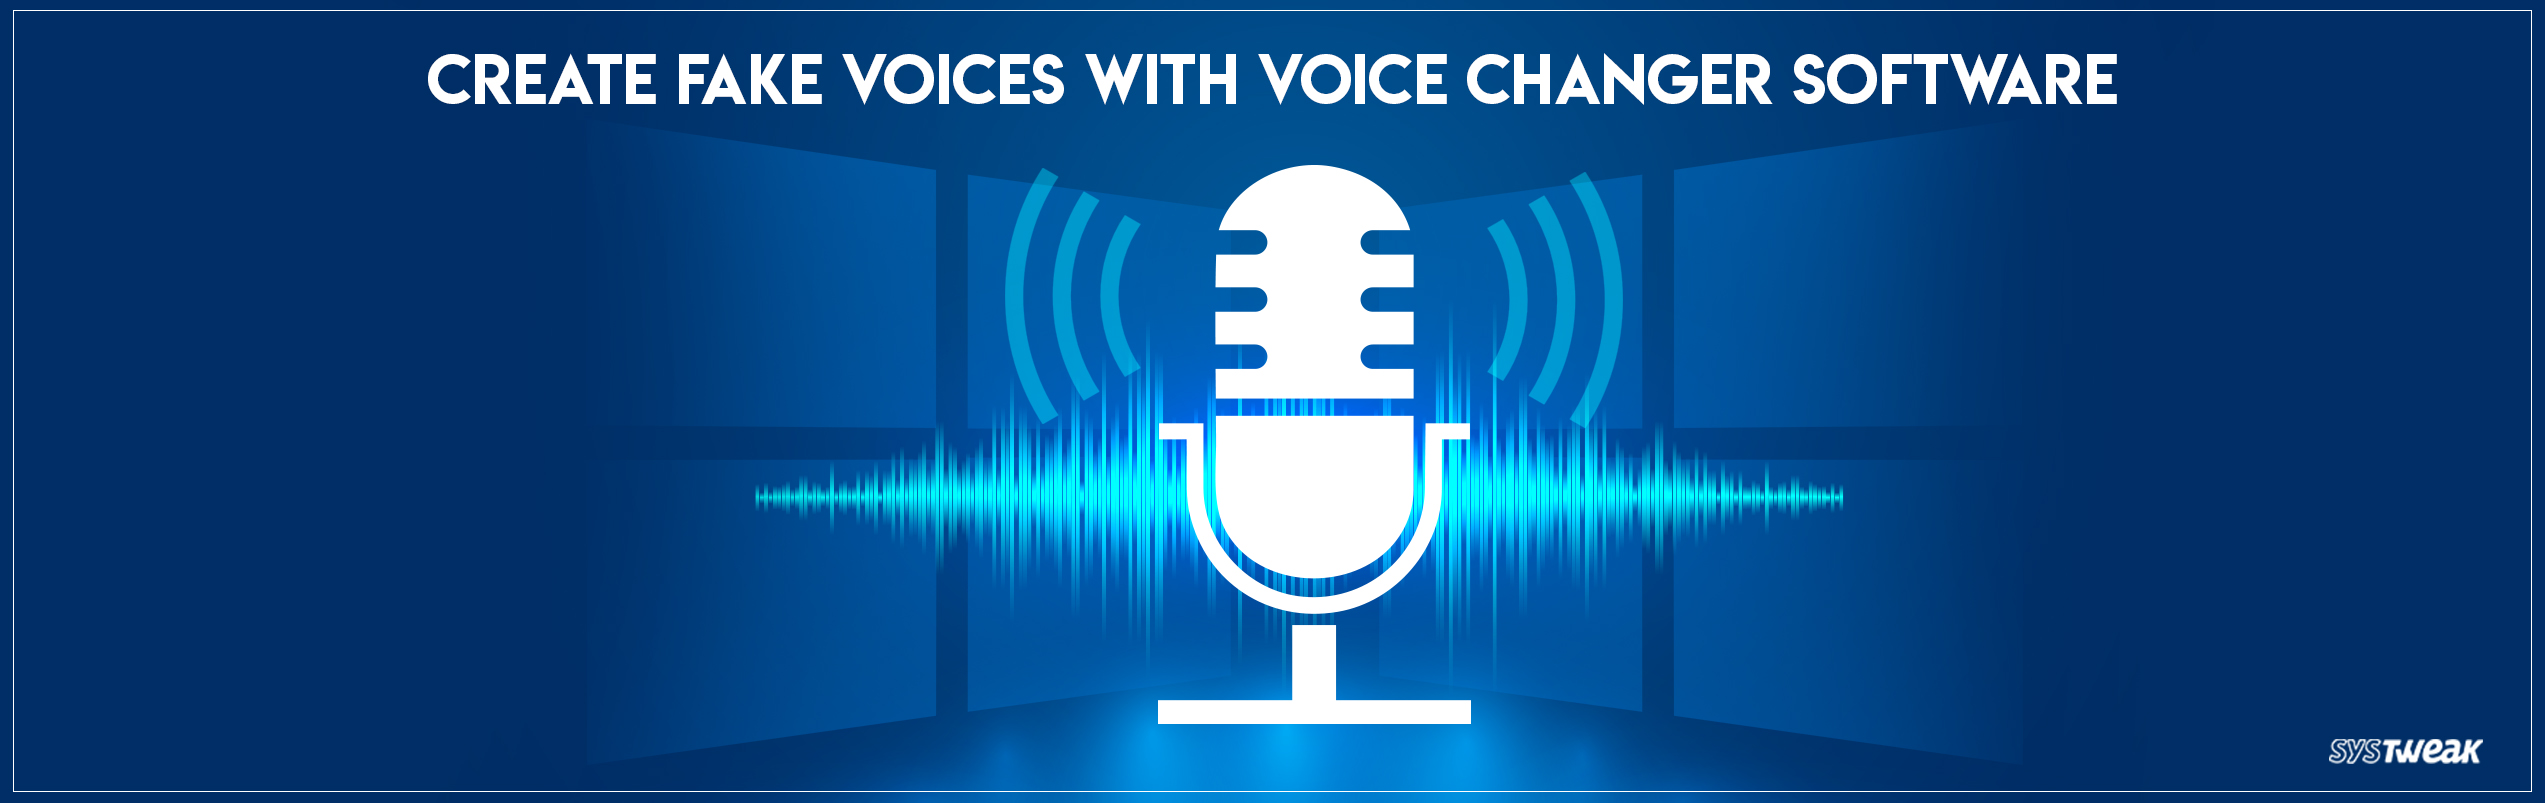 best voice changer software for windows 10